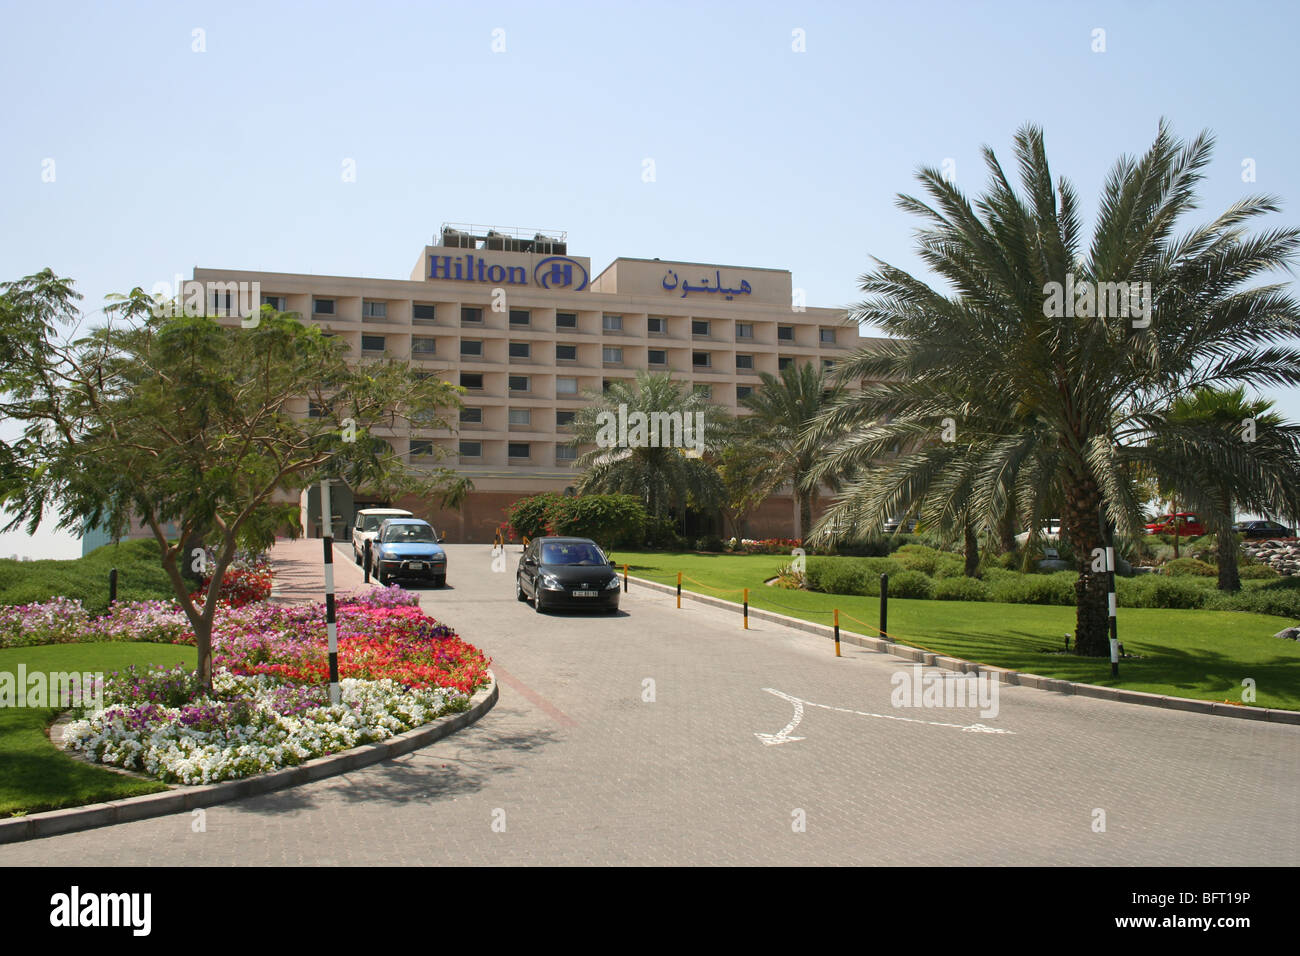 Ras AL Khaimah Hilton Hotel Front Stock Photo